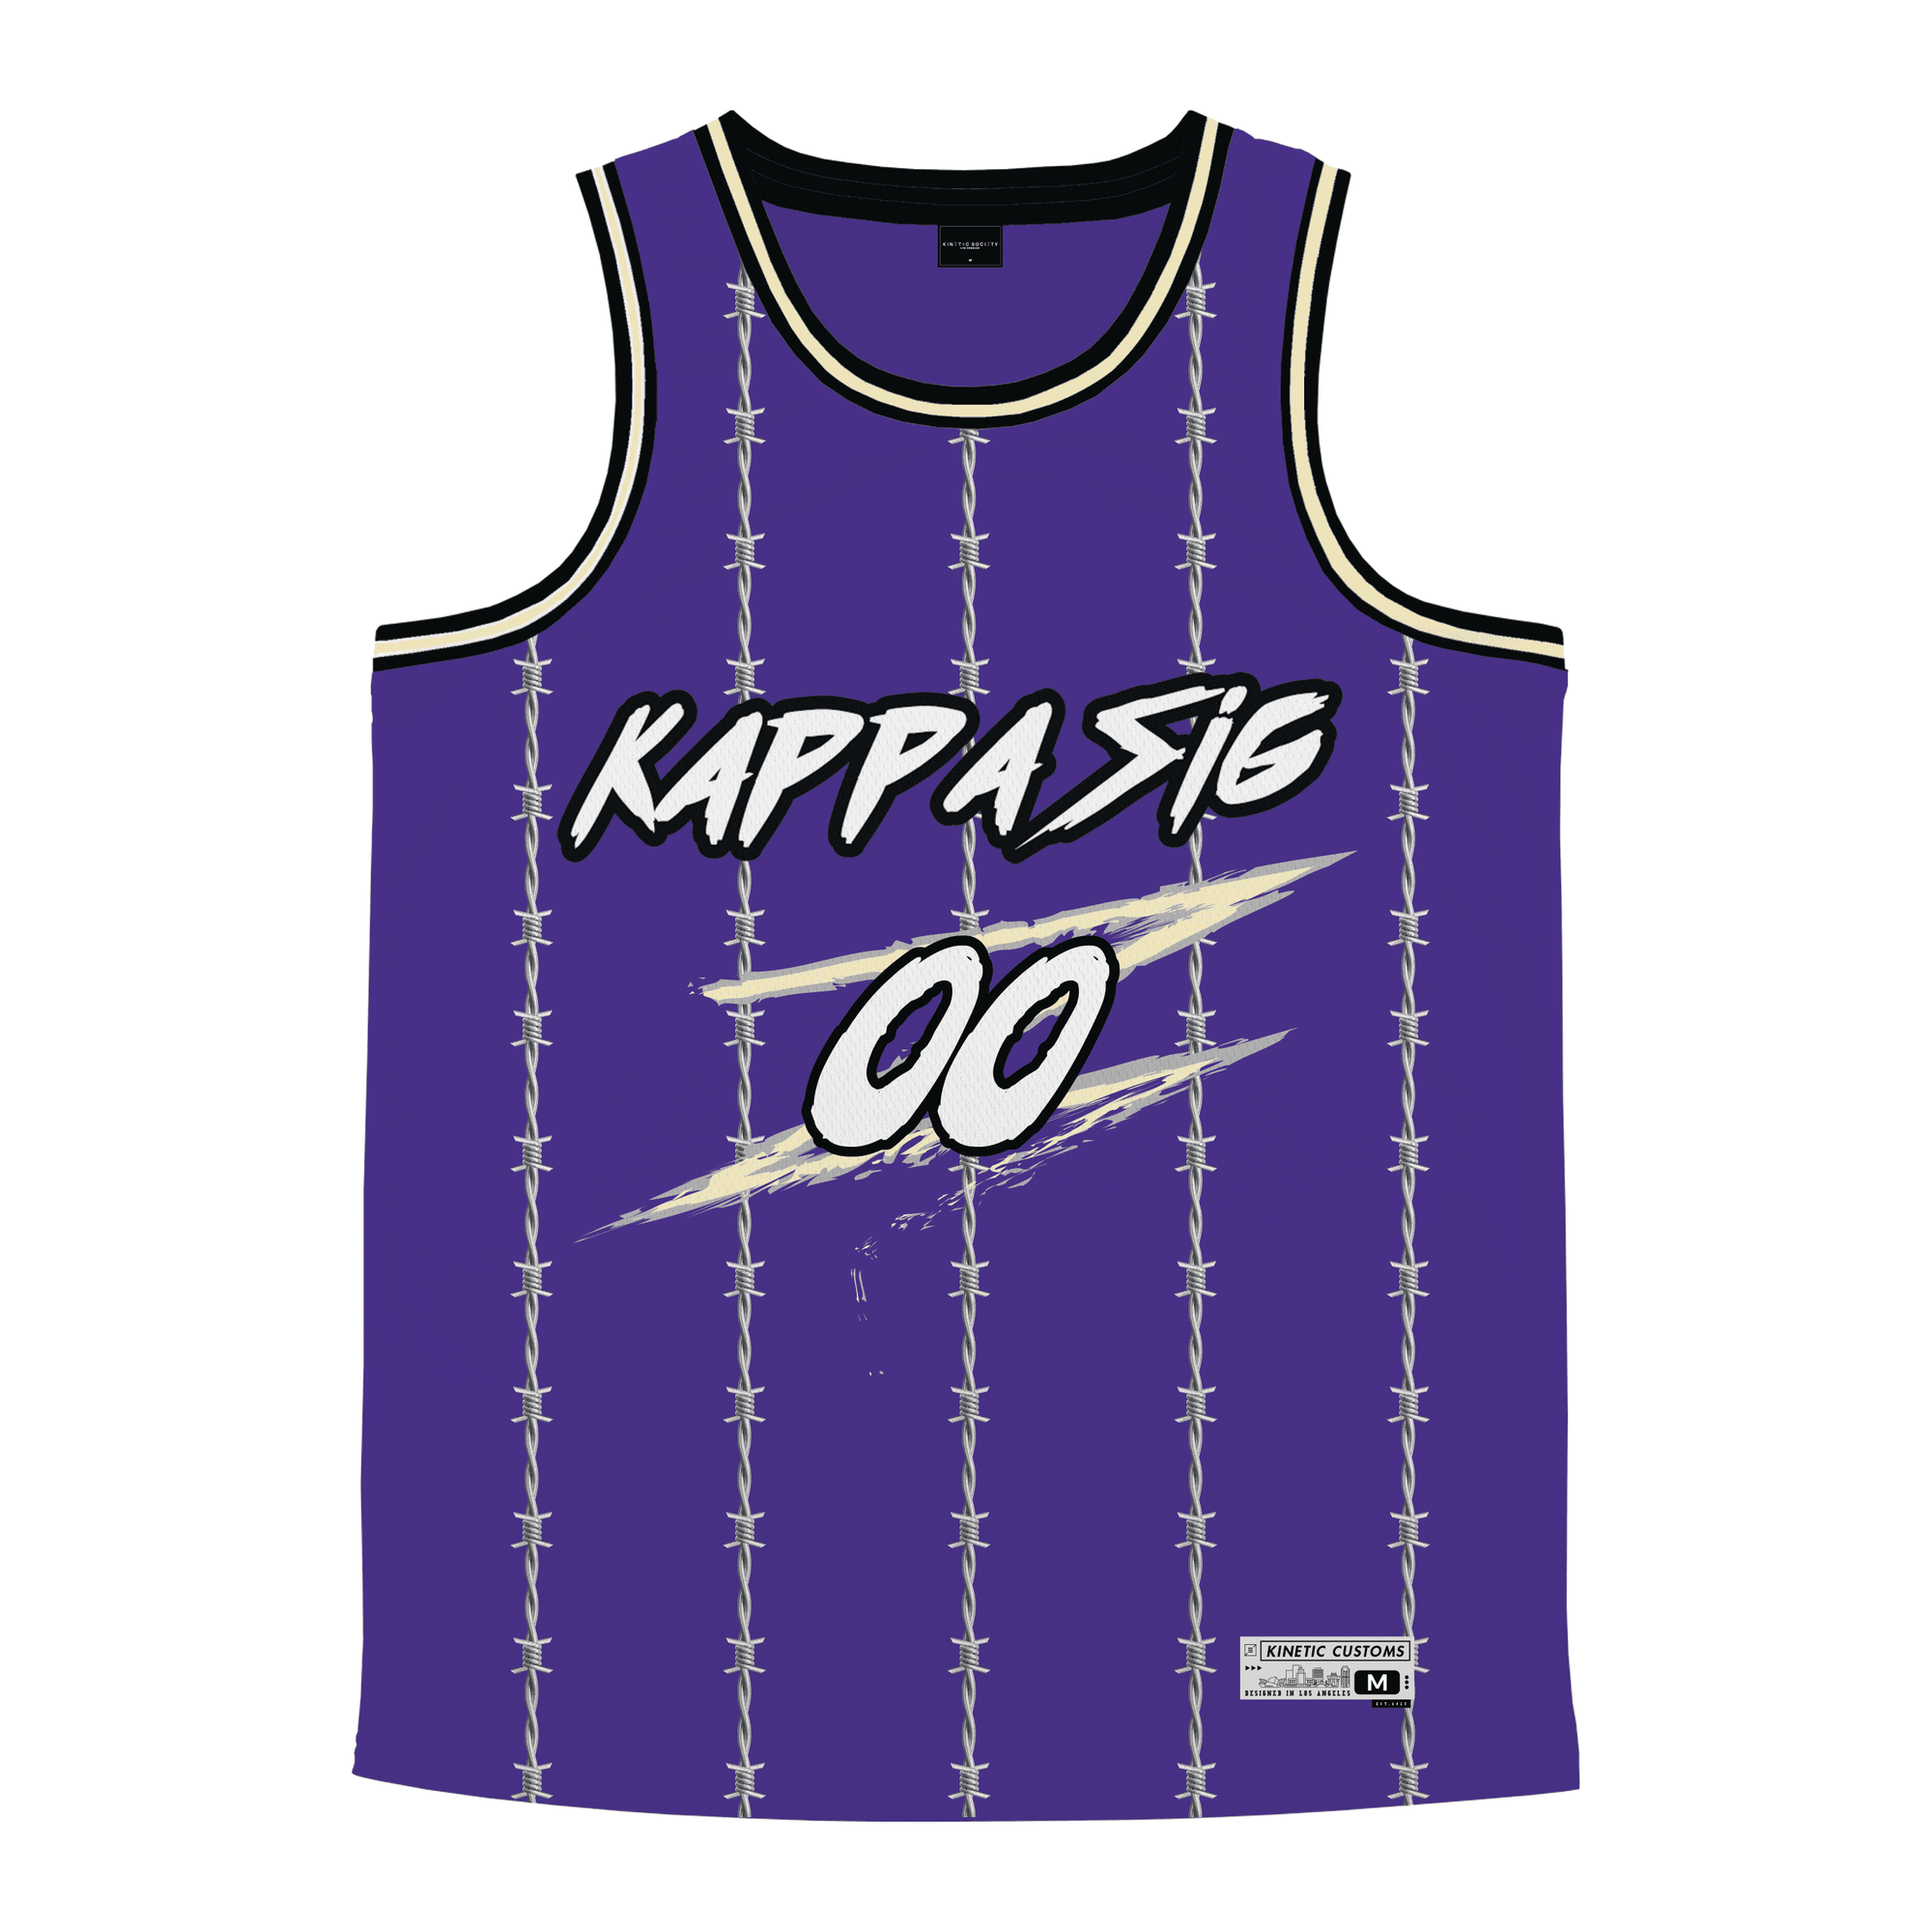 Kappa Sigma - Barbed Wire Basketball Jersey